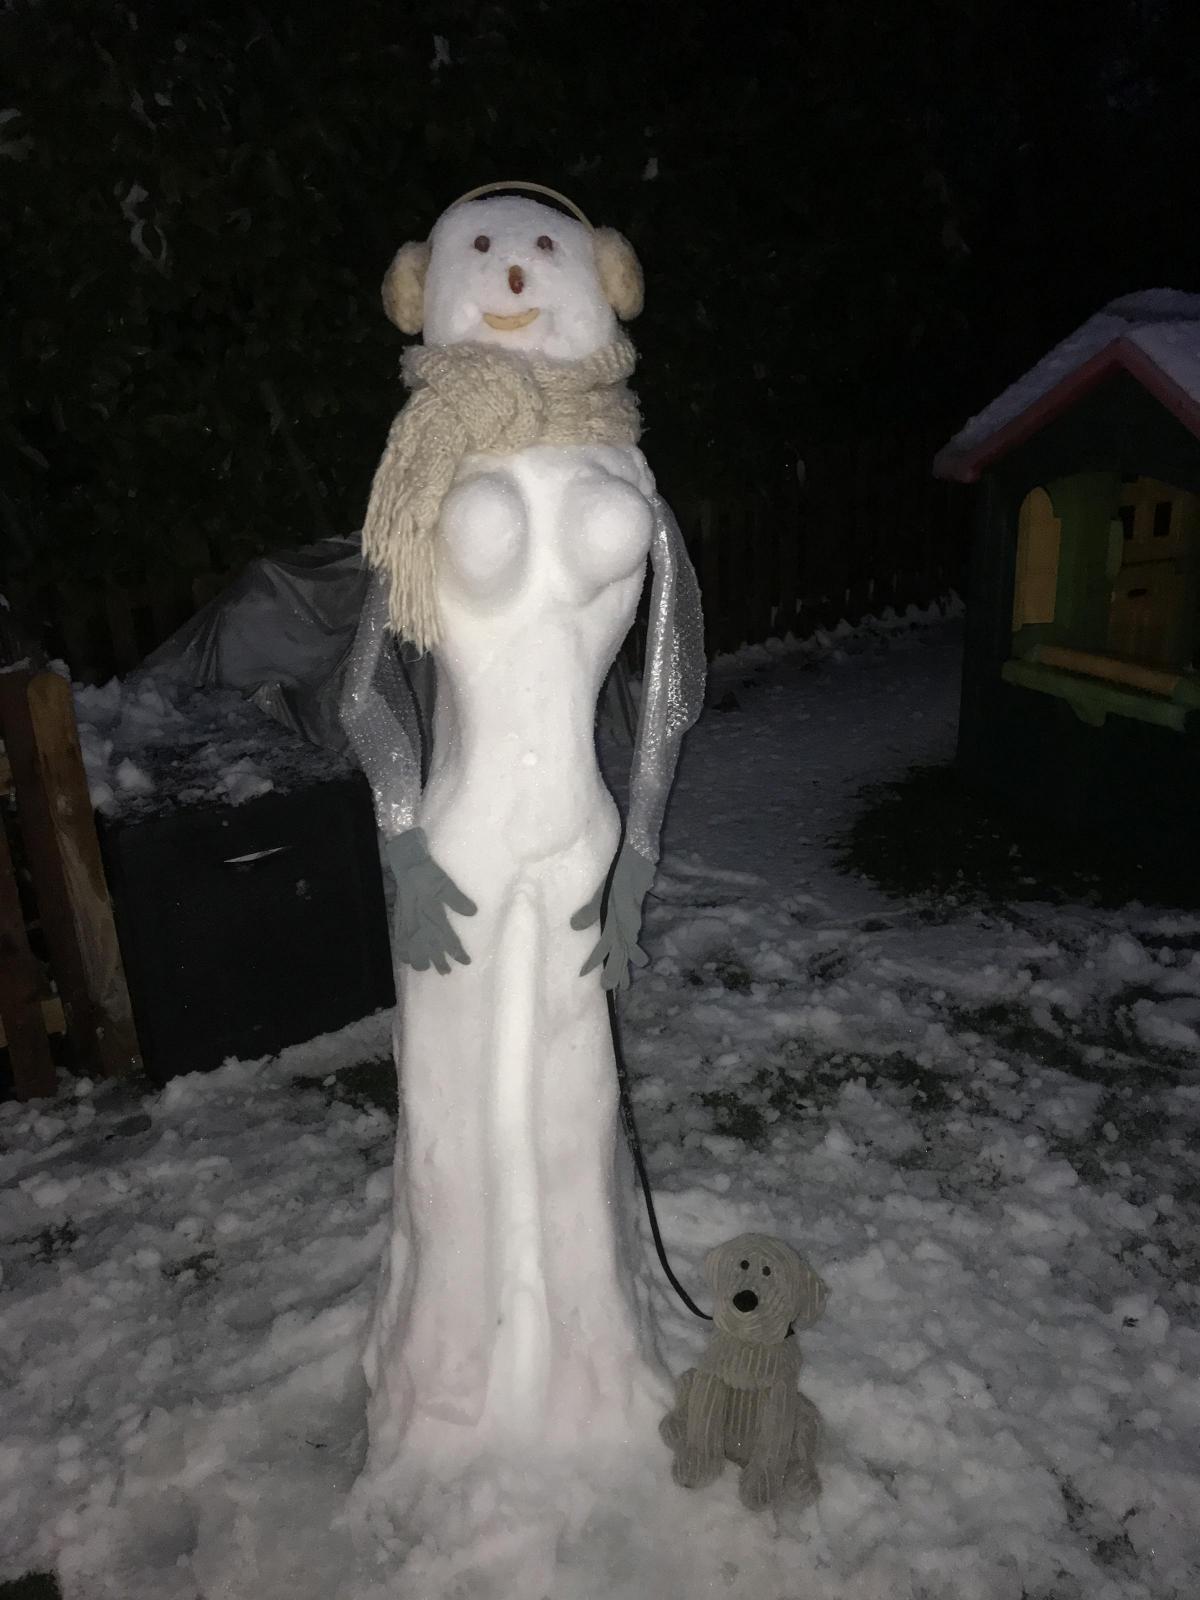 Florrie the snowwoman by Siobhan O'Grady